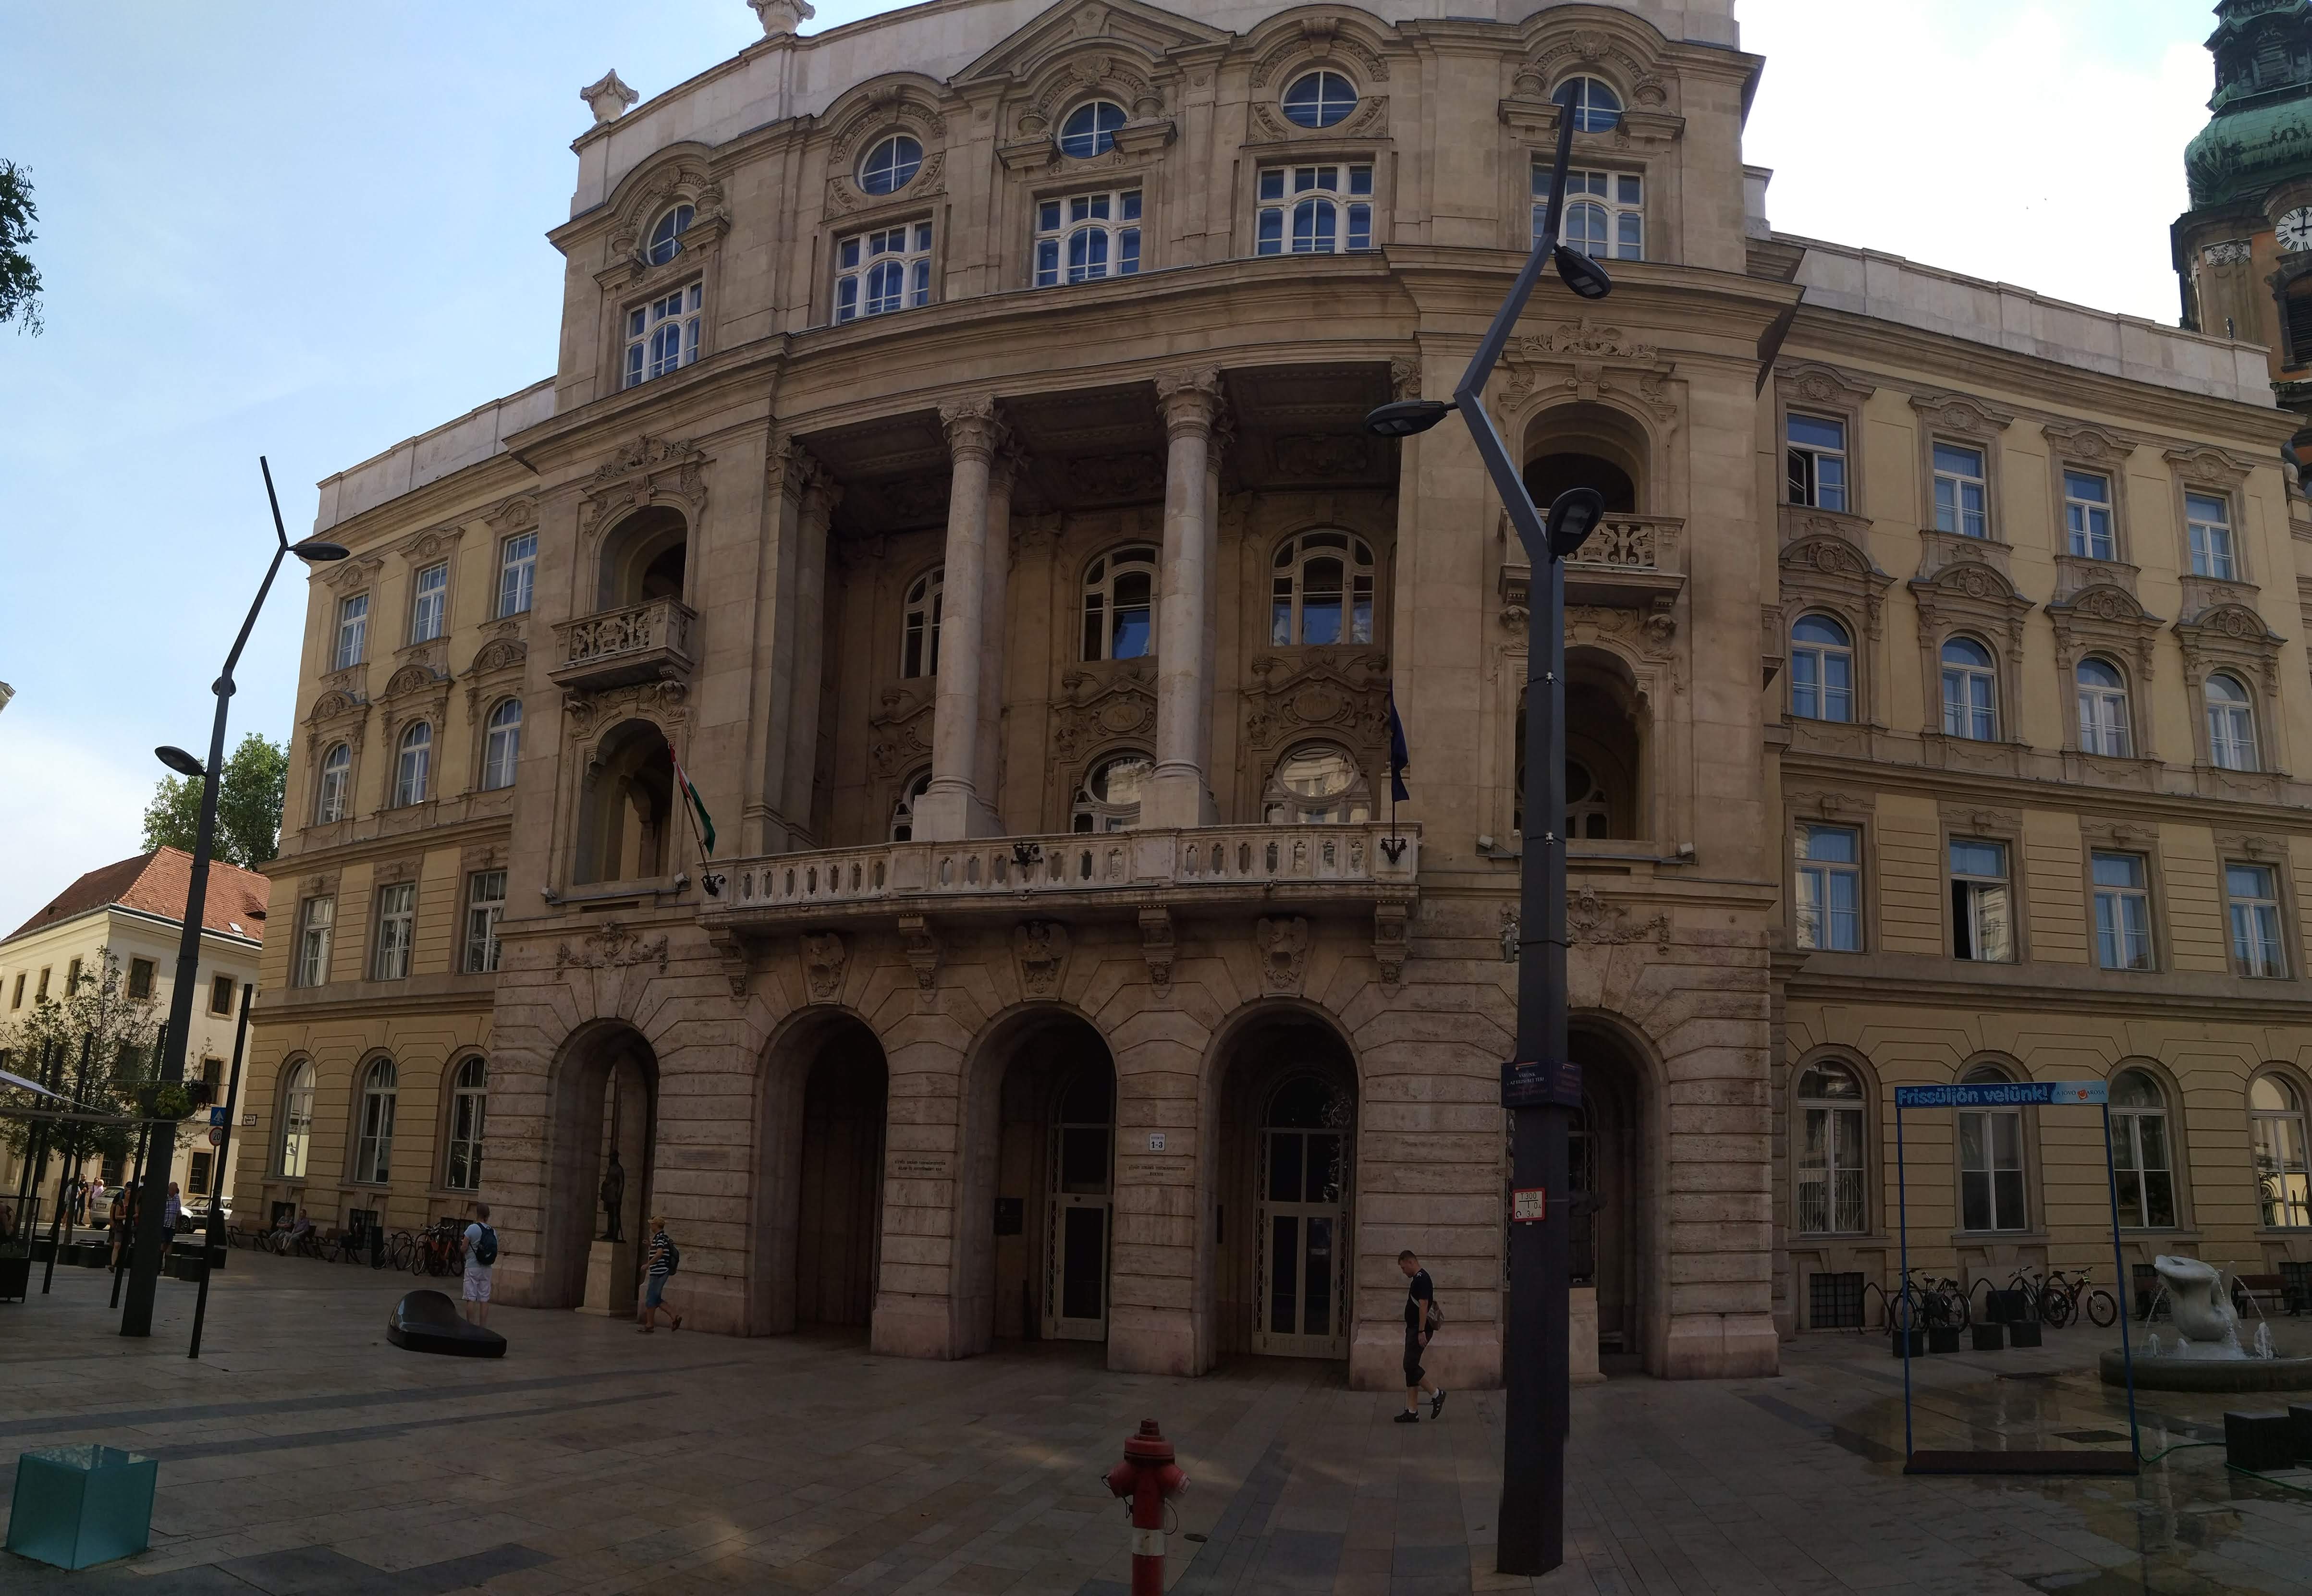 The University of Law at Egyetem tér